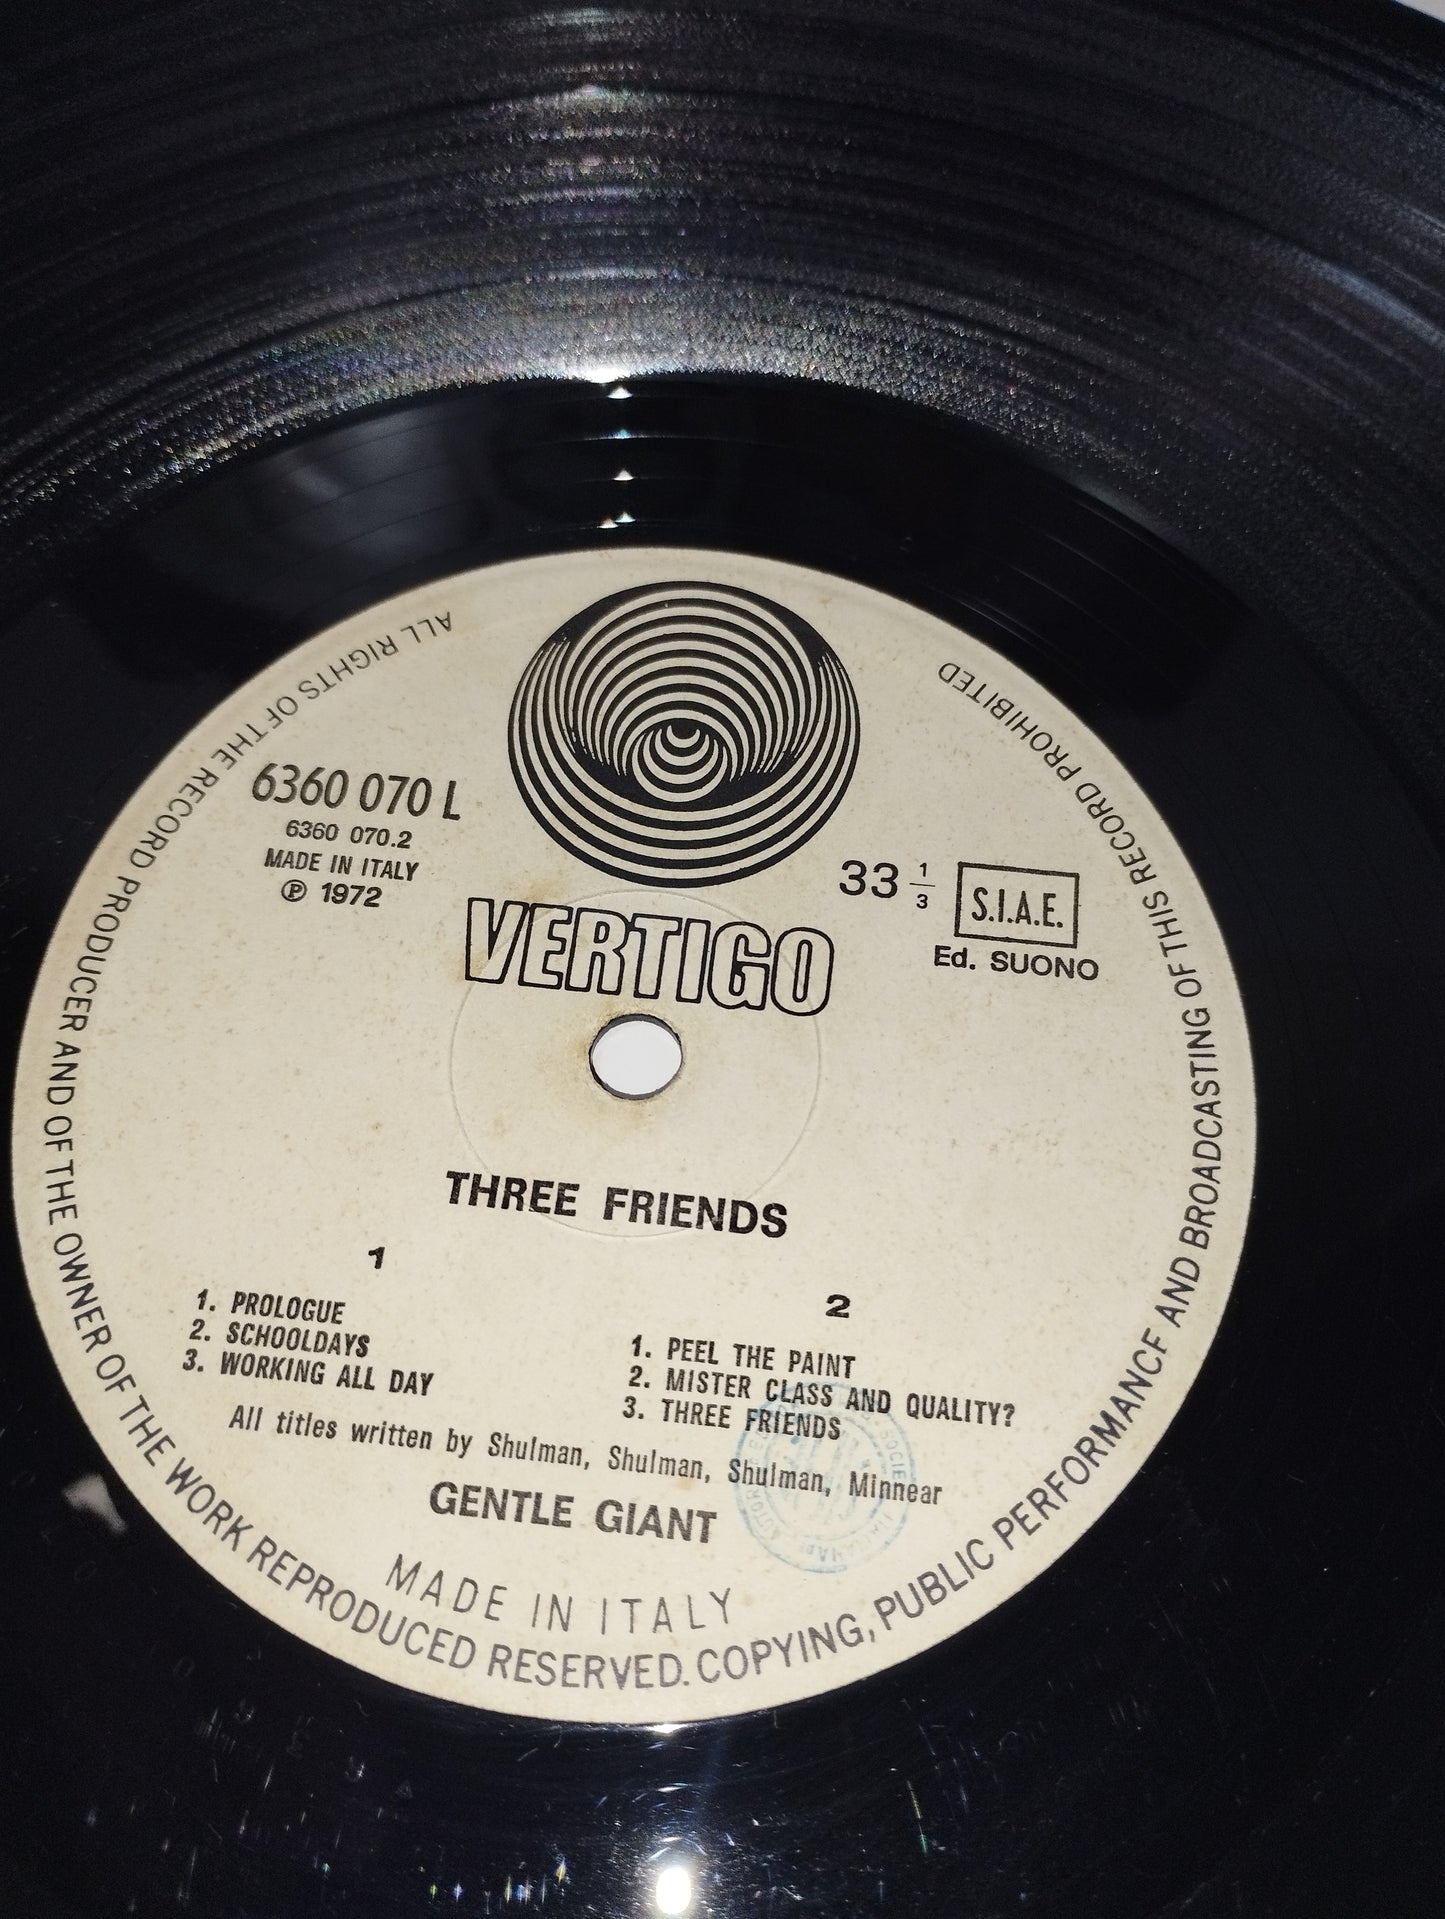 Three Friends Gentle Giant Lp 33 Rpm Published in 1972 by Vertigo cod.6360070 L